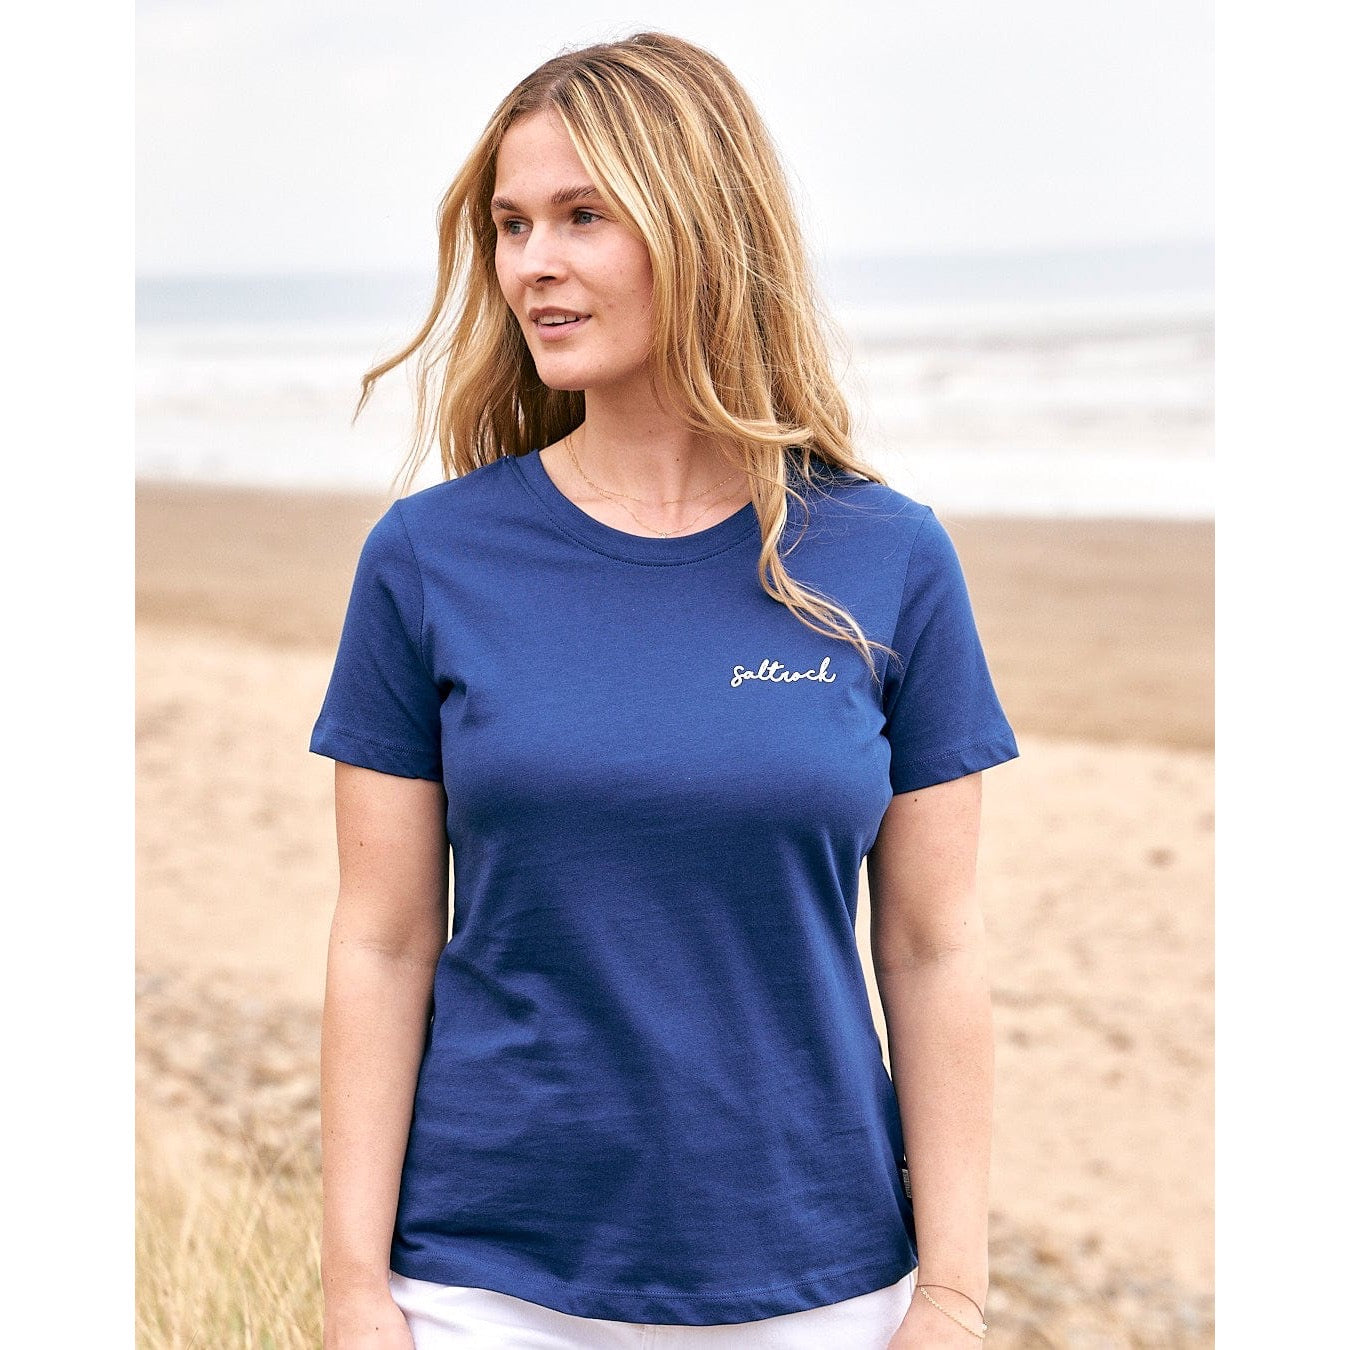 Saltrock Womens Velator T-Shirt Navy Clothing XS ADULT / Navy,SMALL ADULT / Navy,MEDIUM ADULT / Navy,LARGE ADULT / Navy